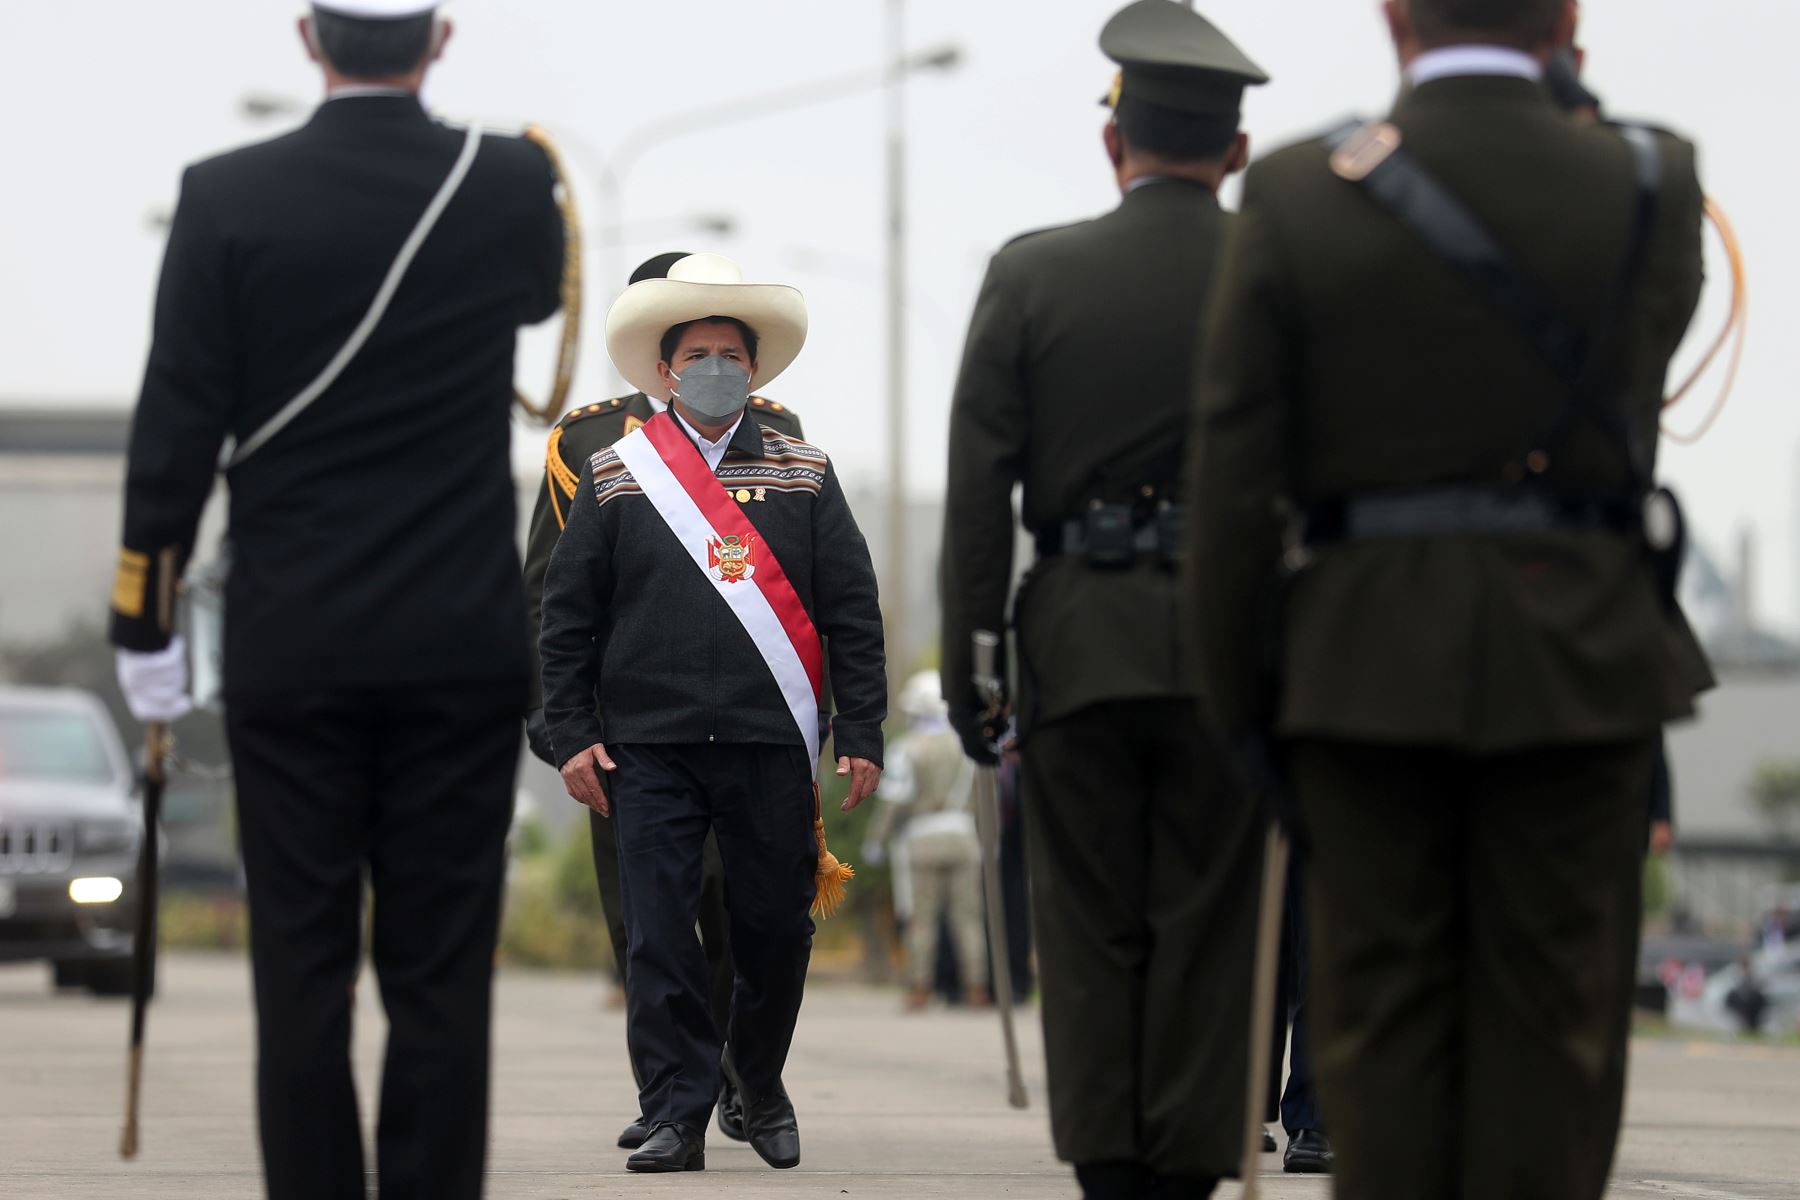 Gobierno de Perú en crisis por escándalo militar que involucra directamente al presidente Castillo